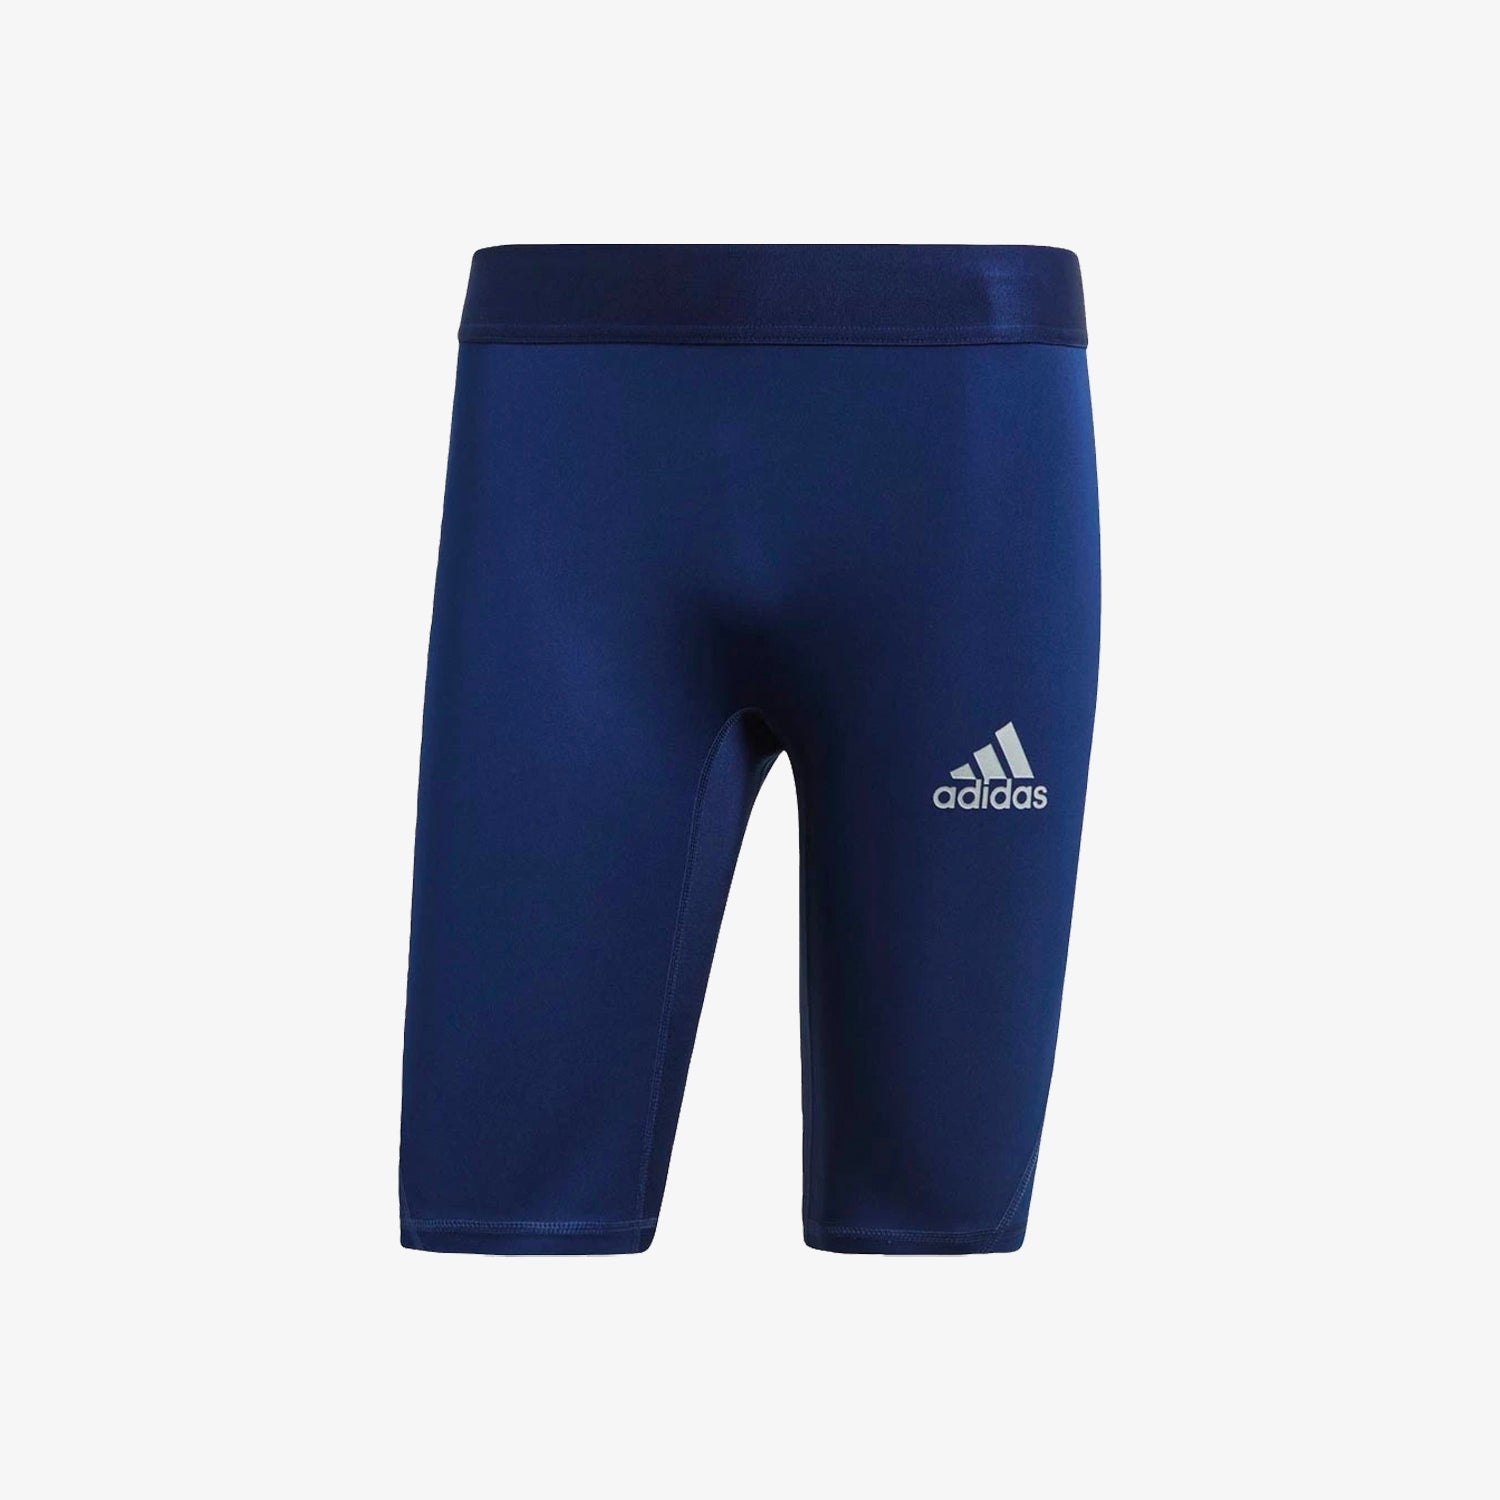 adidas men's compression shorts